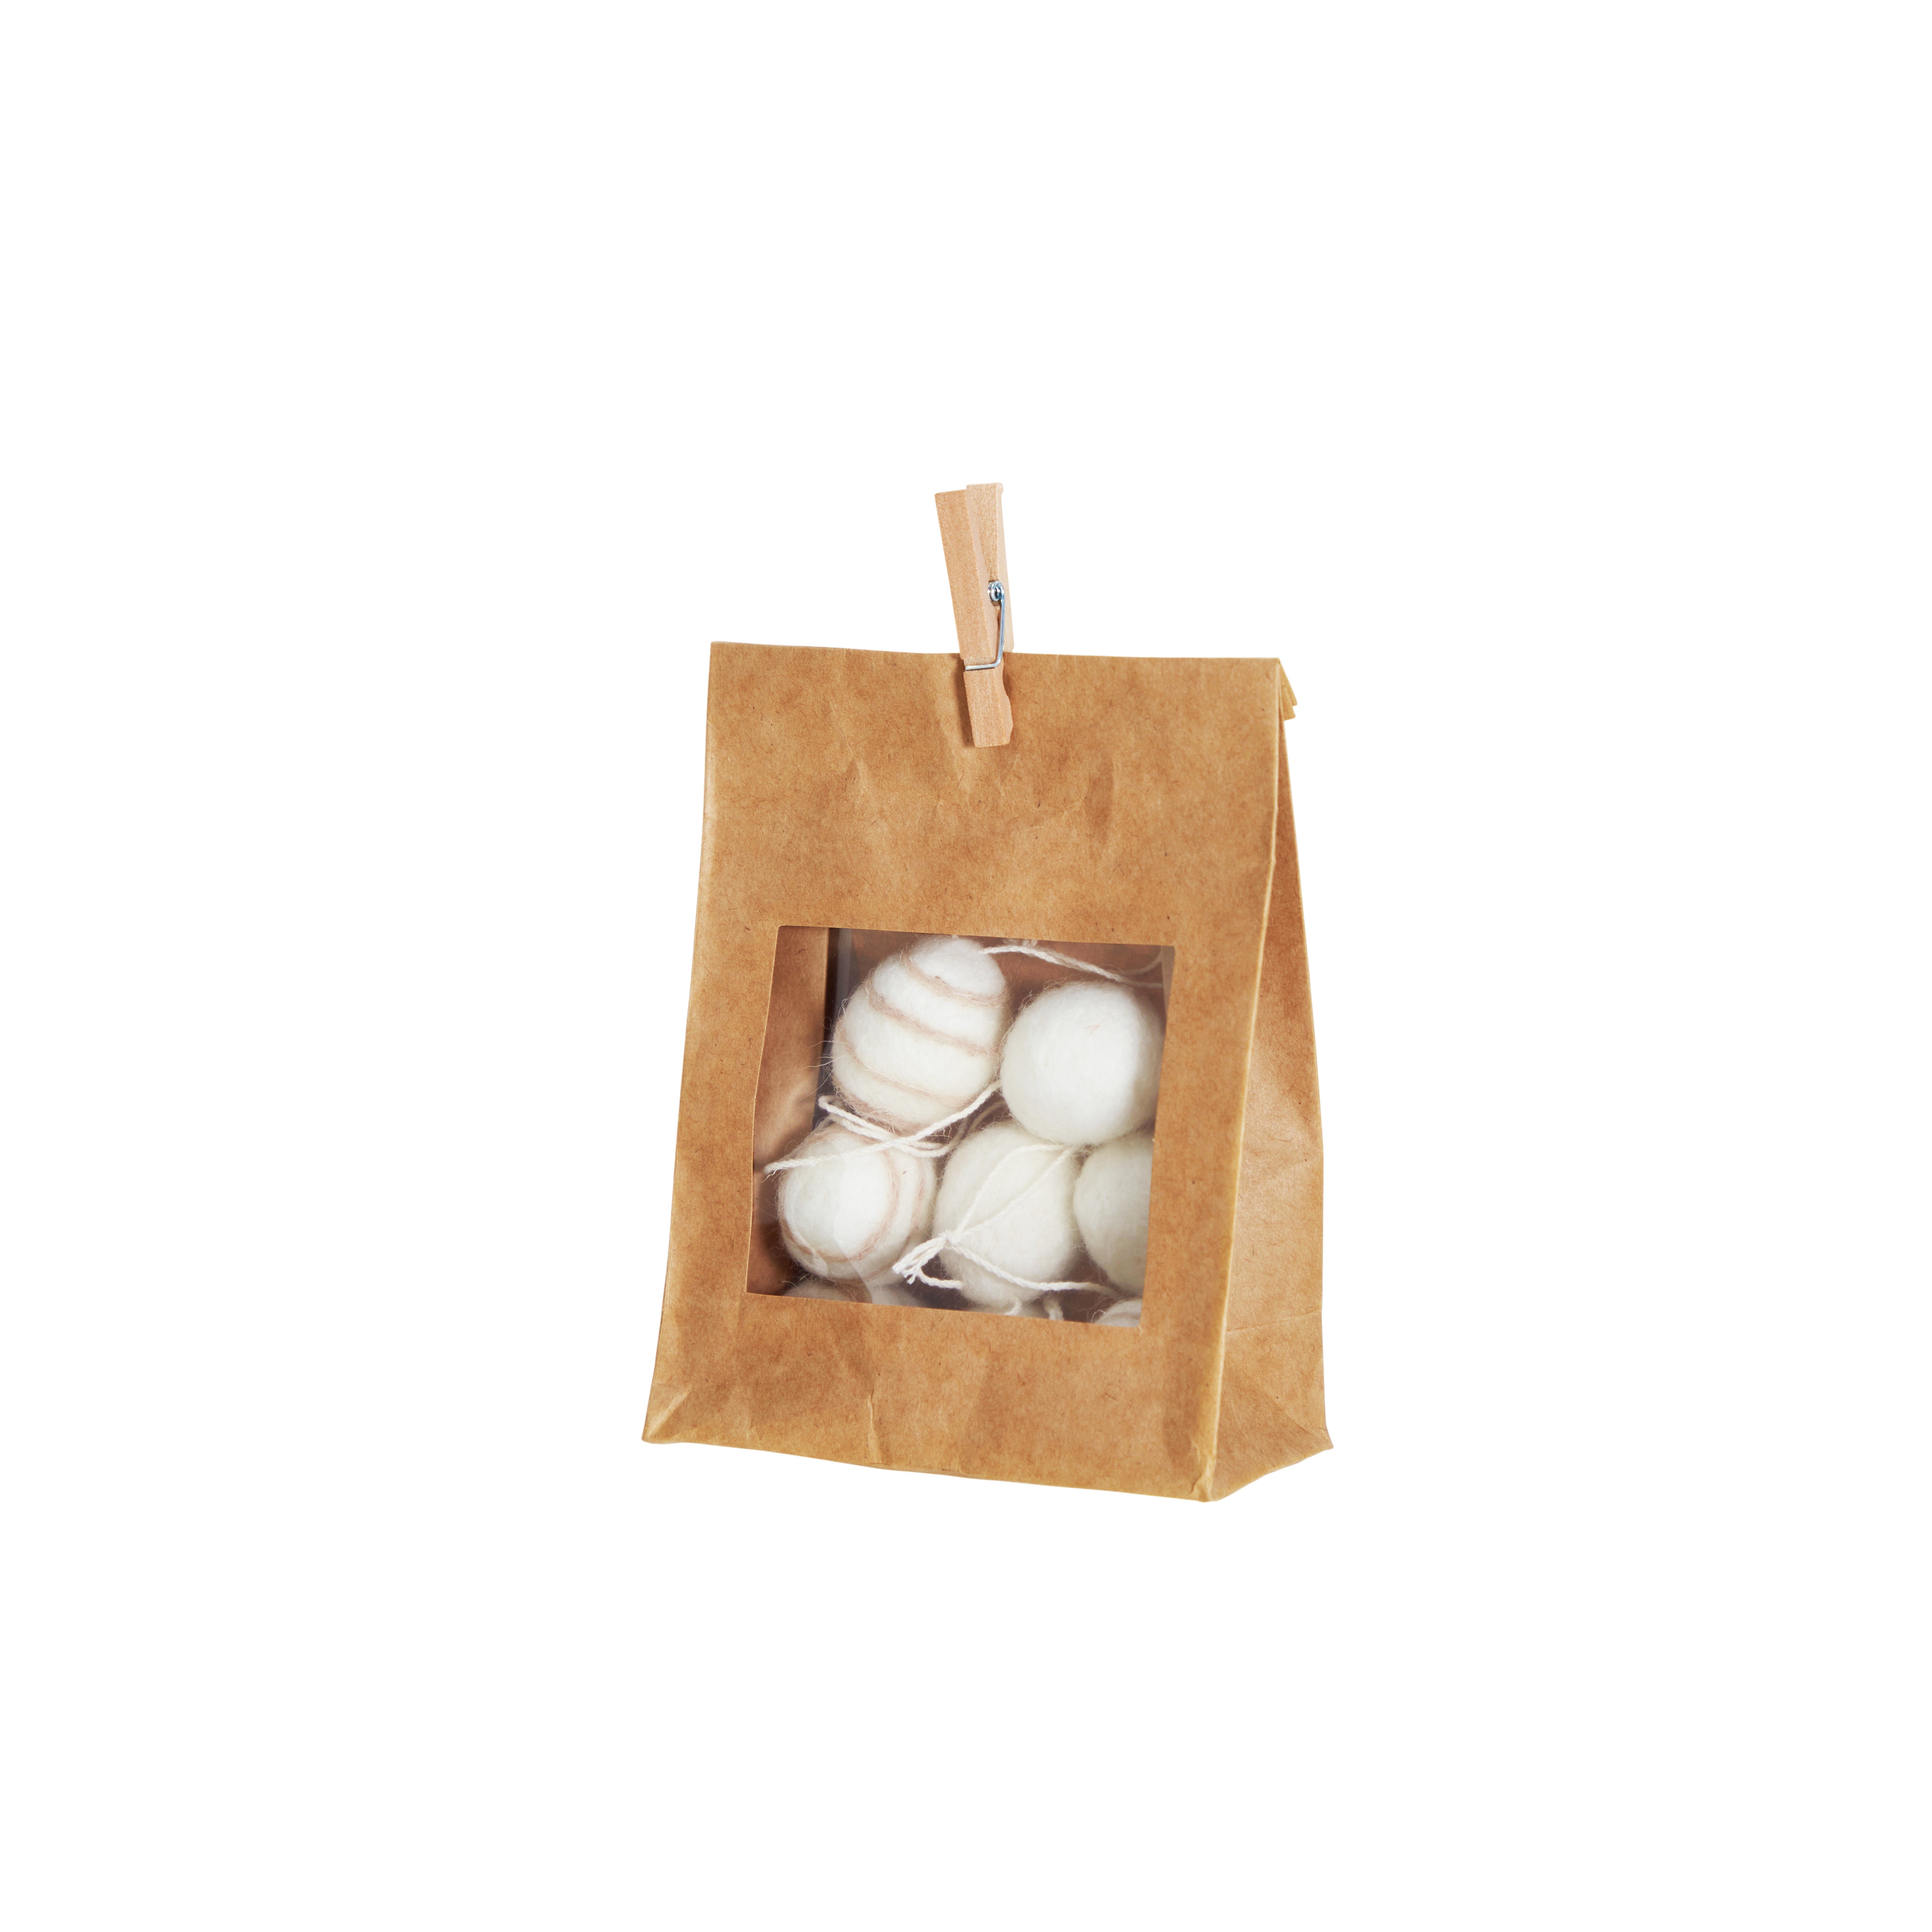 Bag of Striped Eggs